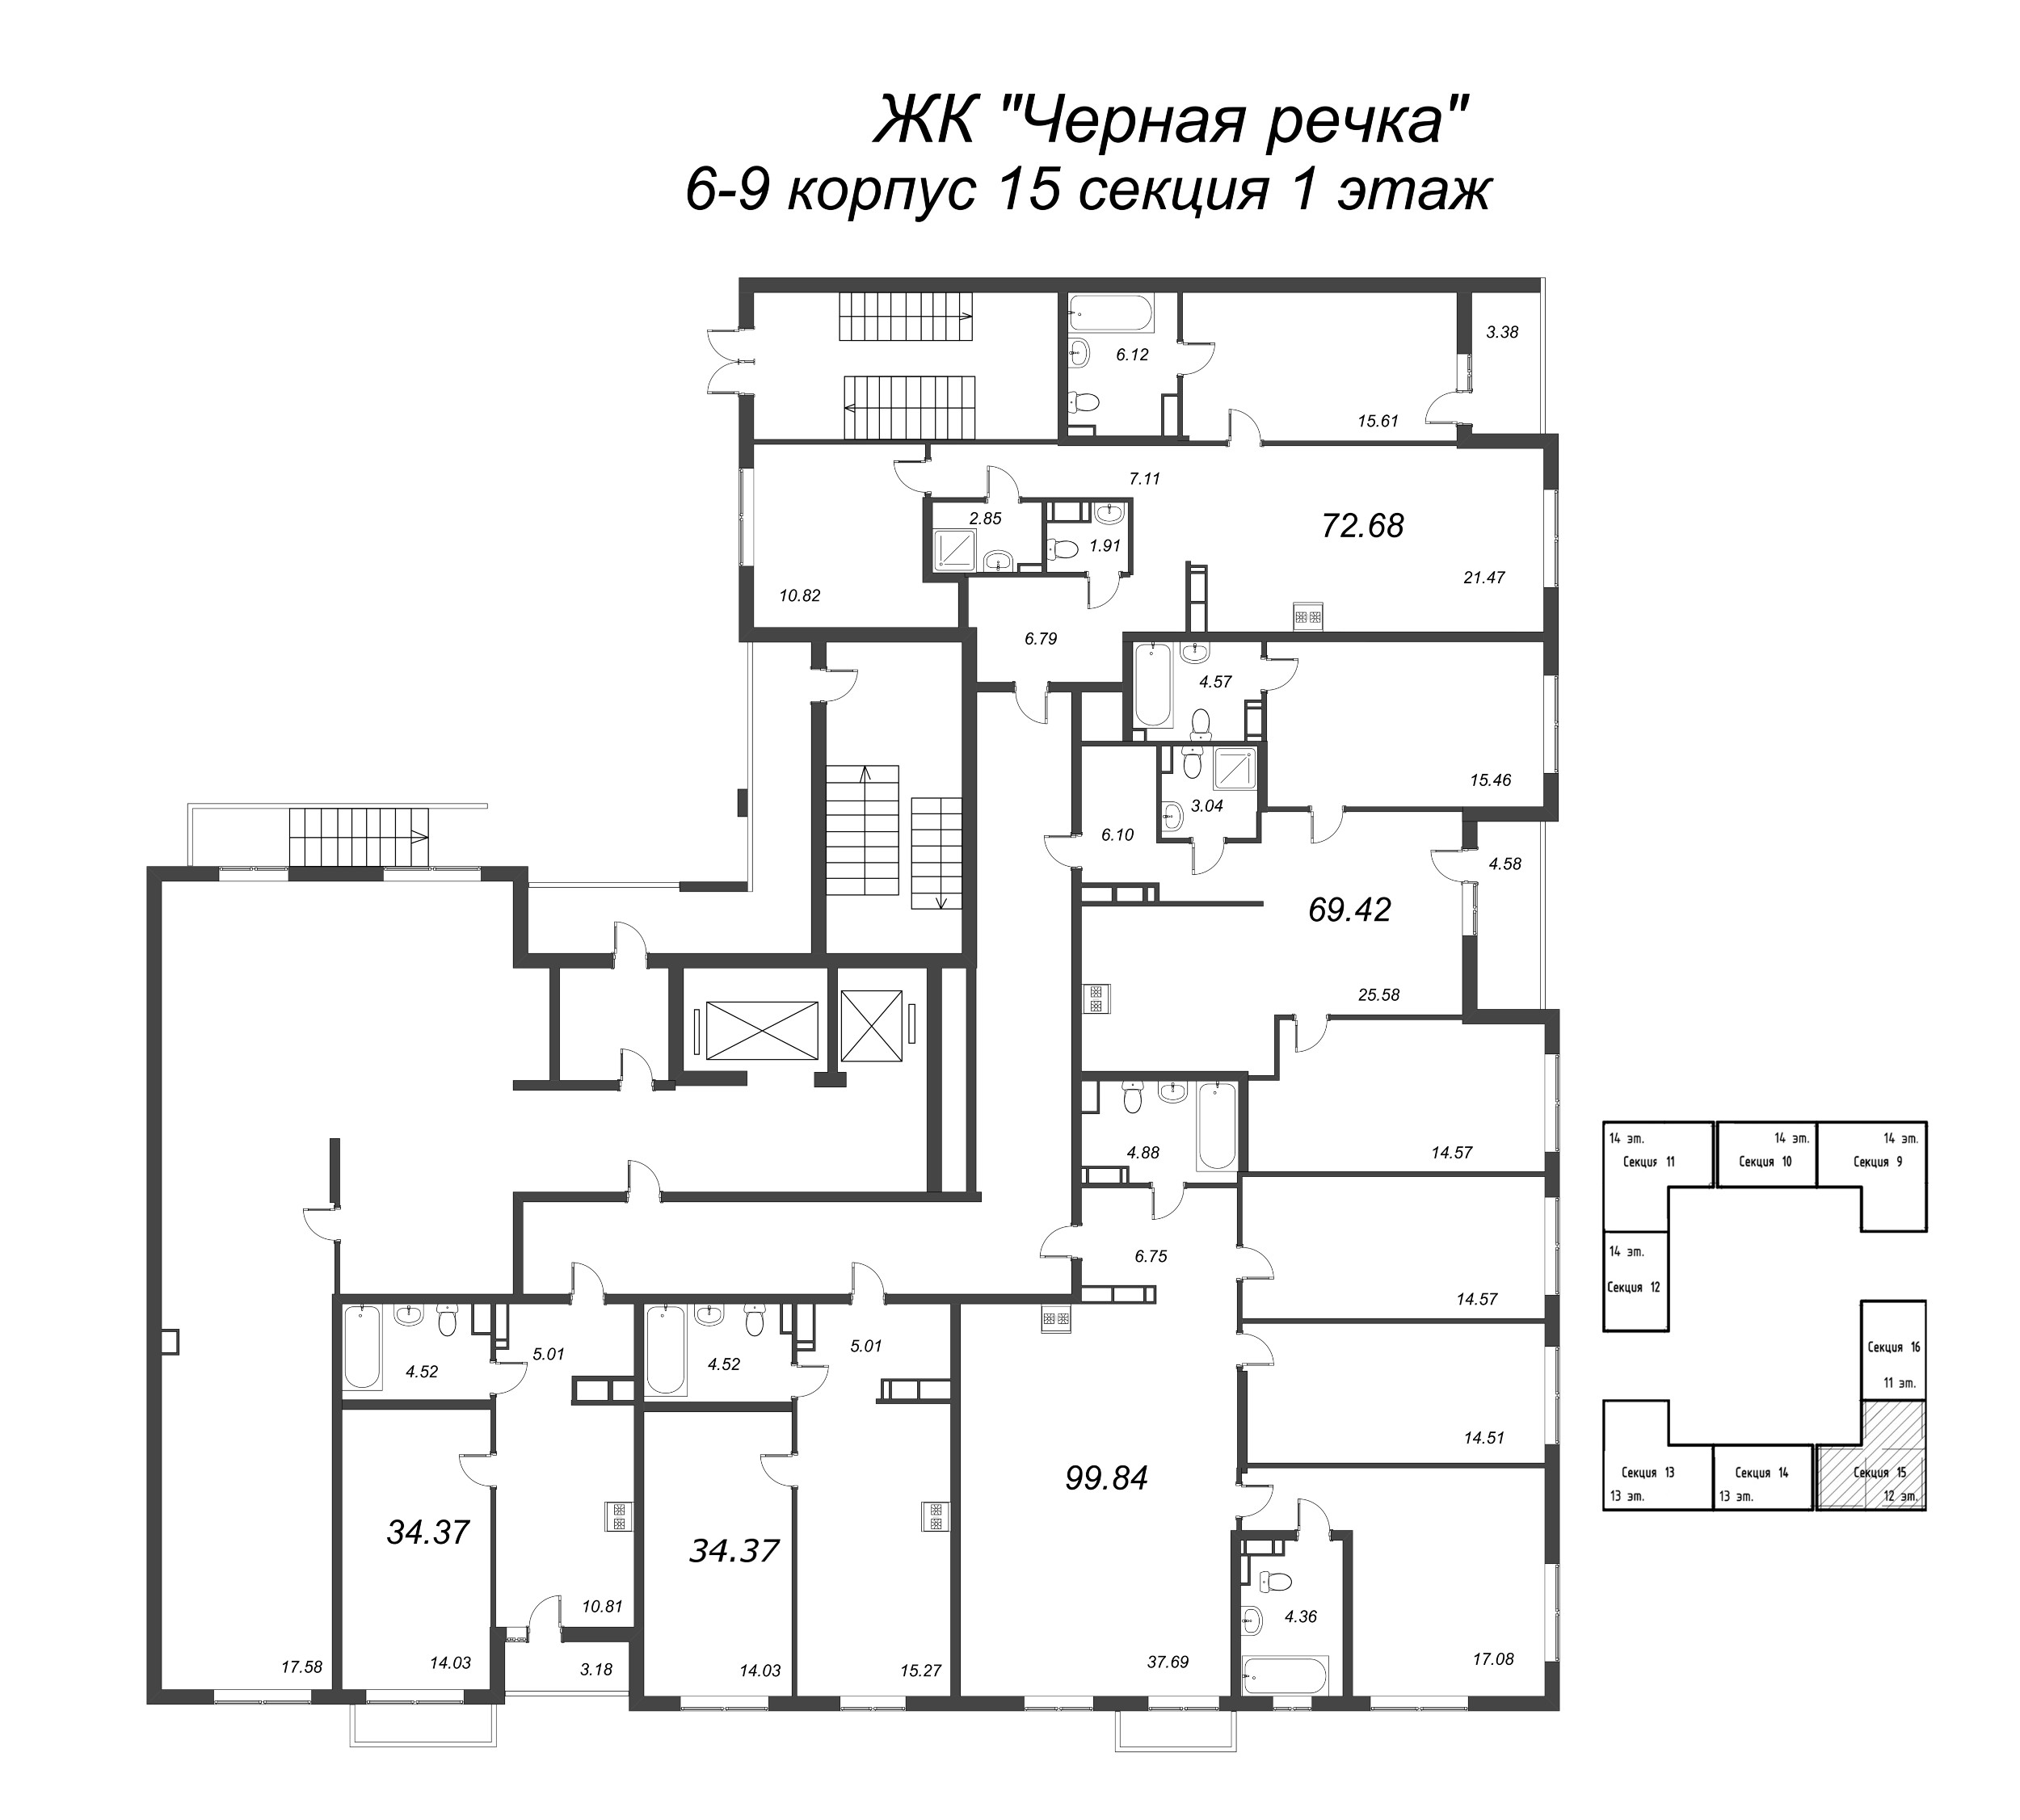 2-комнатная (Евро) квартира, 38.83 м² - планировка этажа